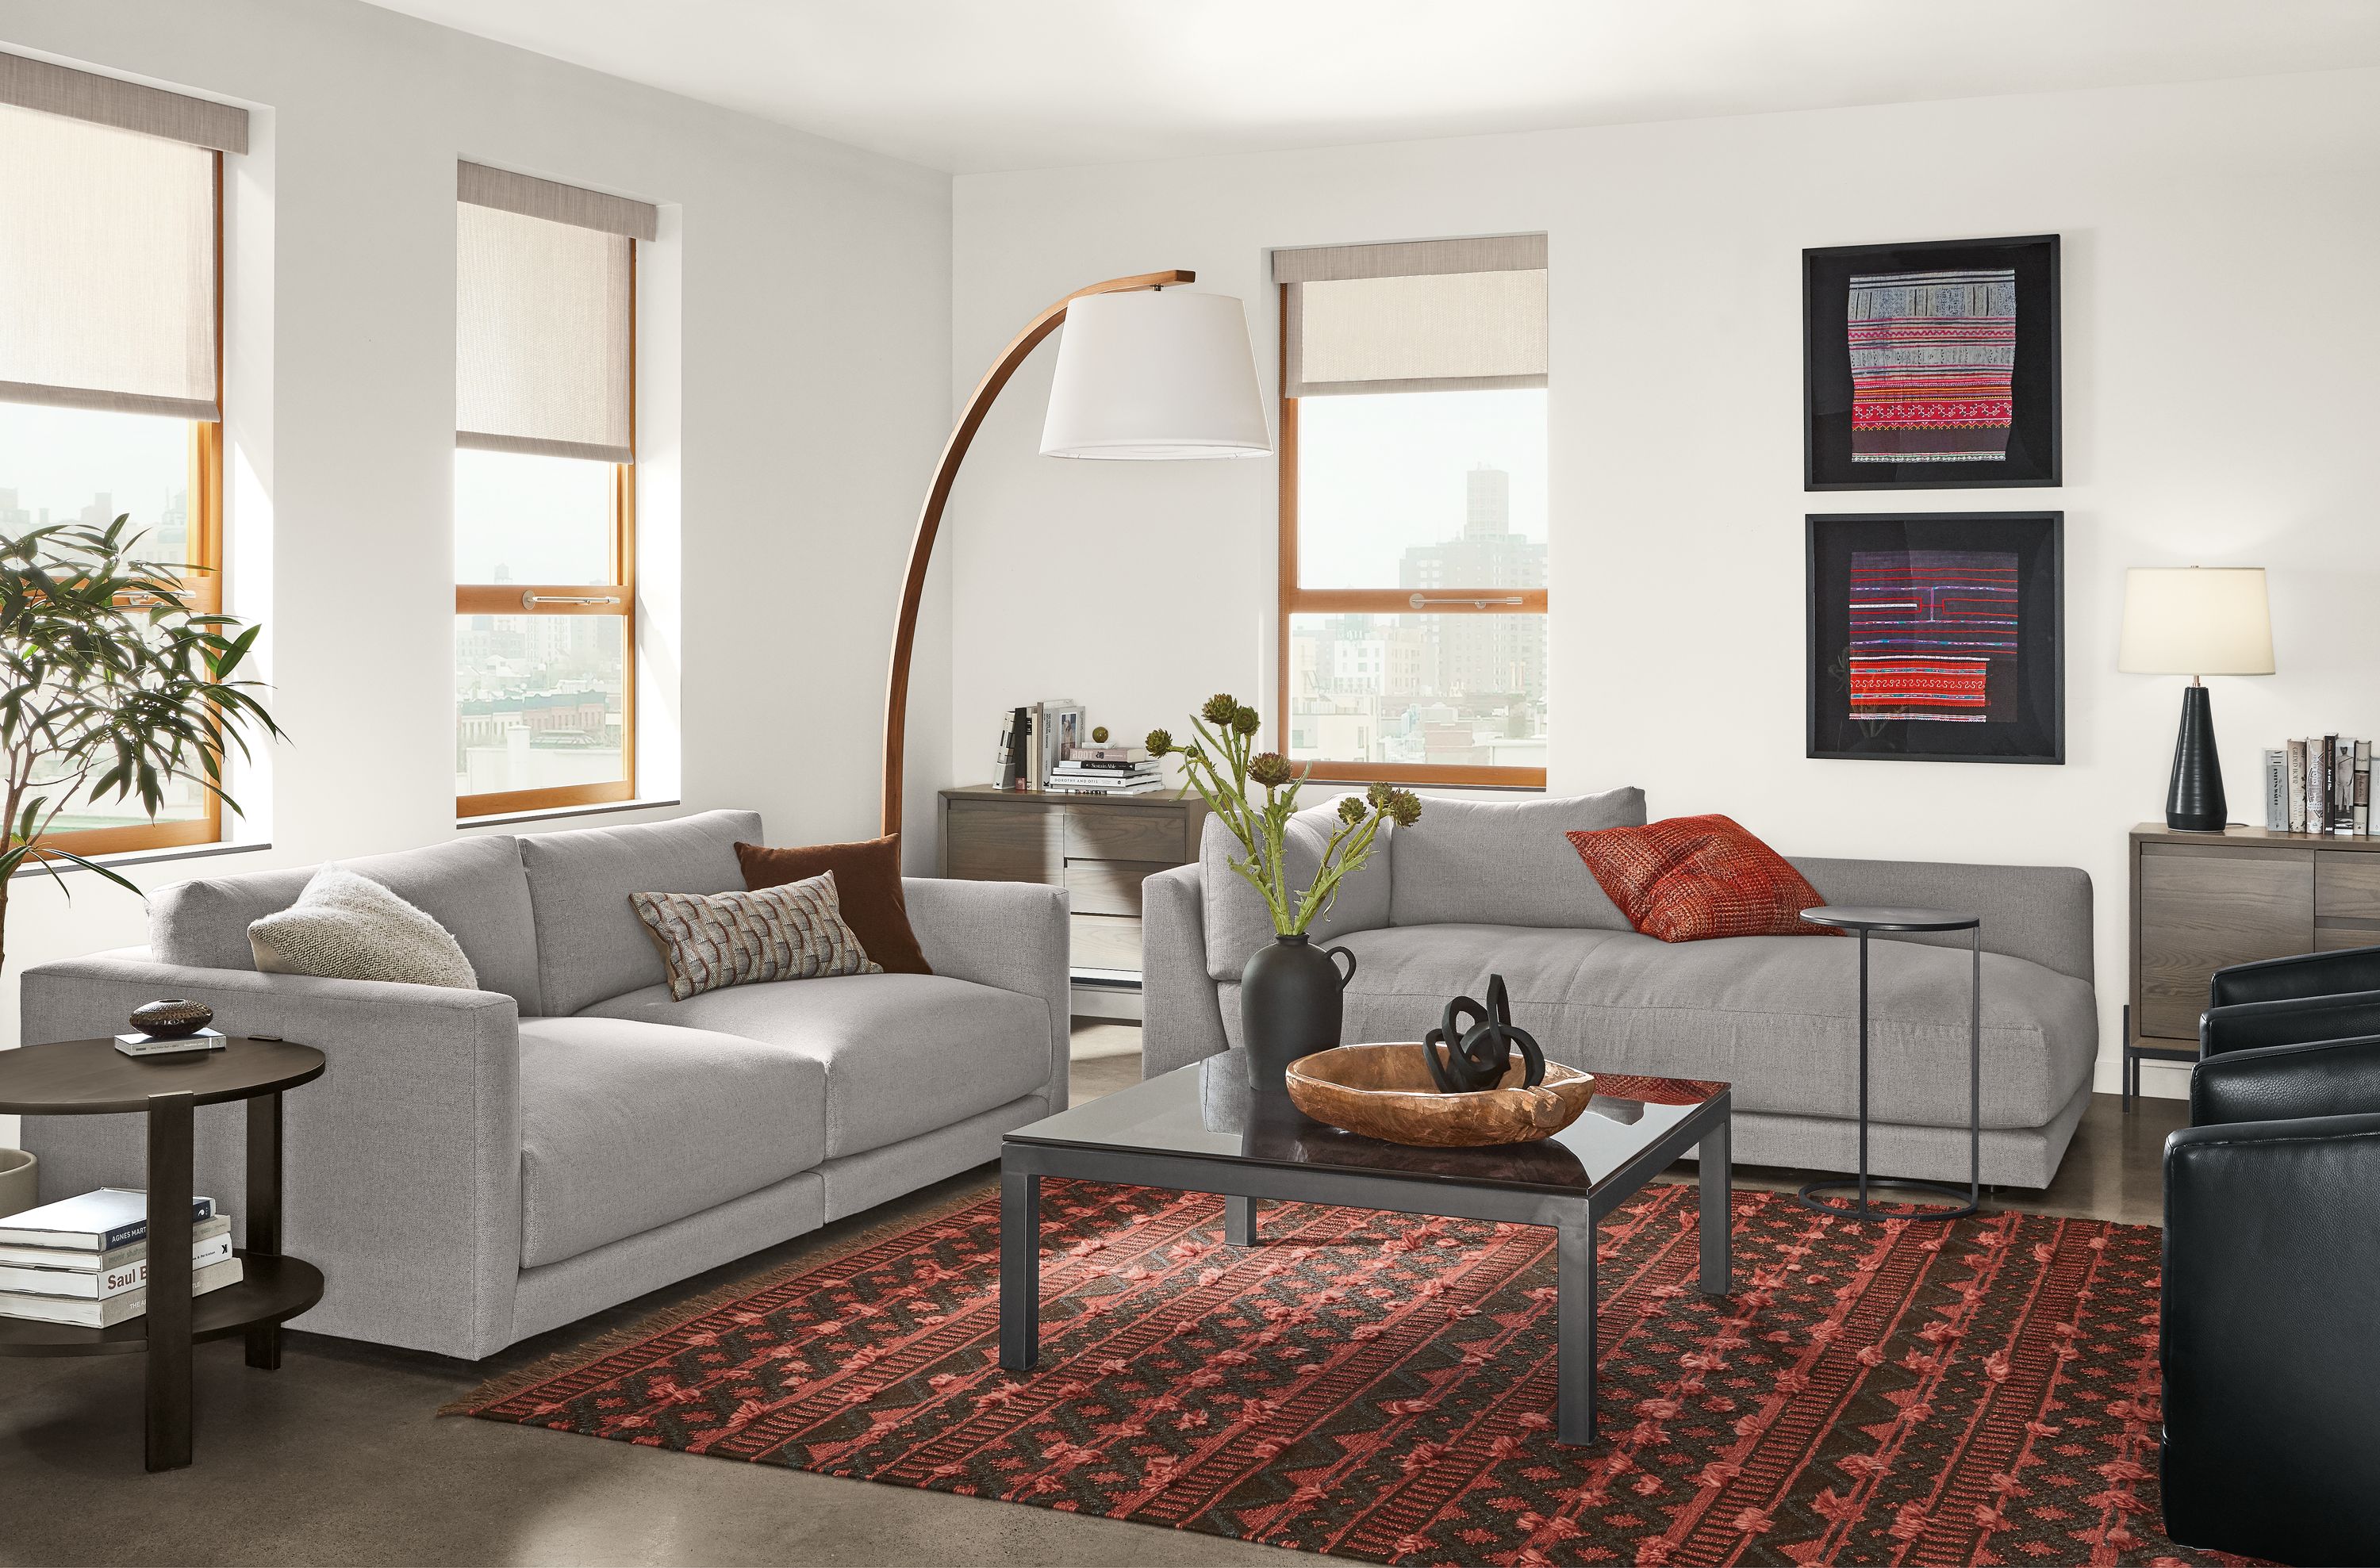 Clemens Deep Modular Sofa in Hines Graphite - Living - Room & Board